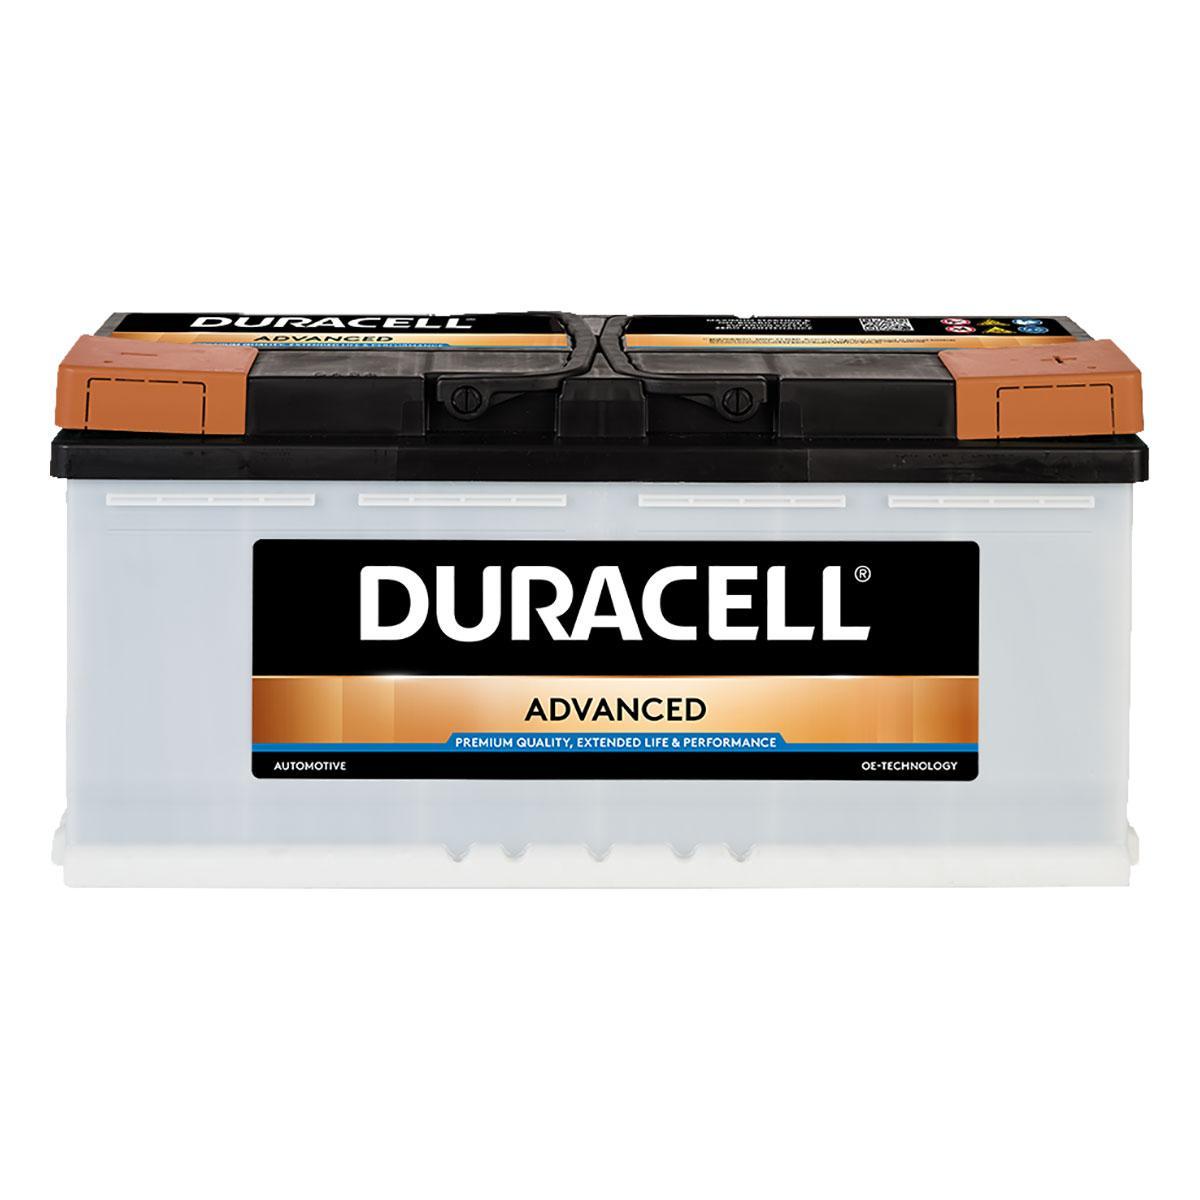 Duracell 020 / DA110 Advanced Car Battery - www.batterycharged.co.uk